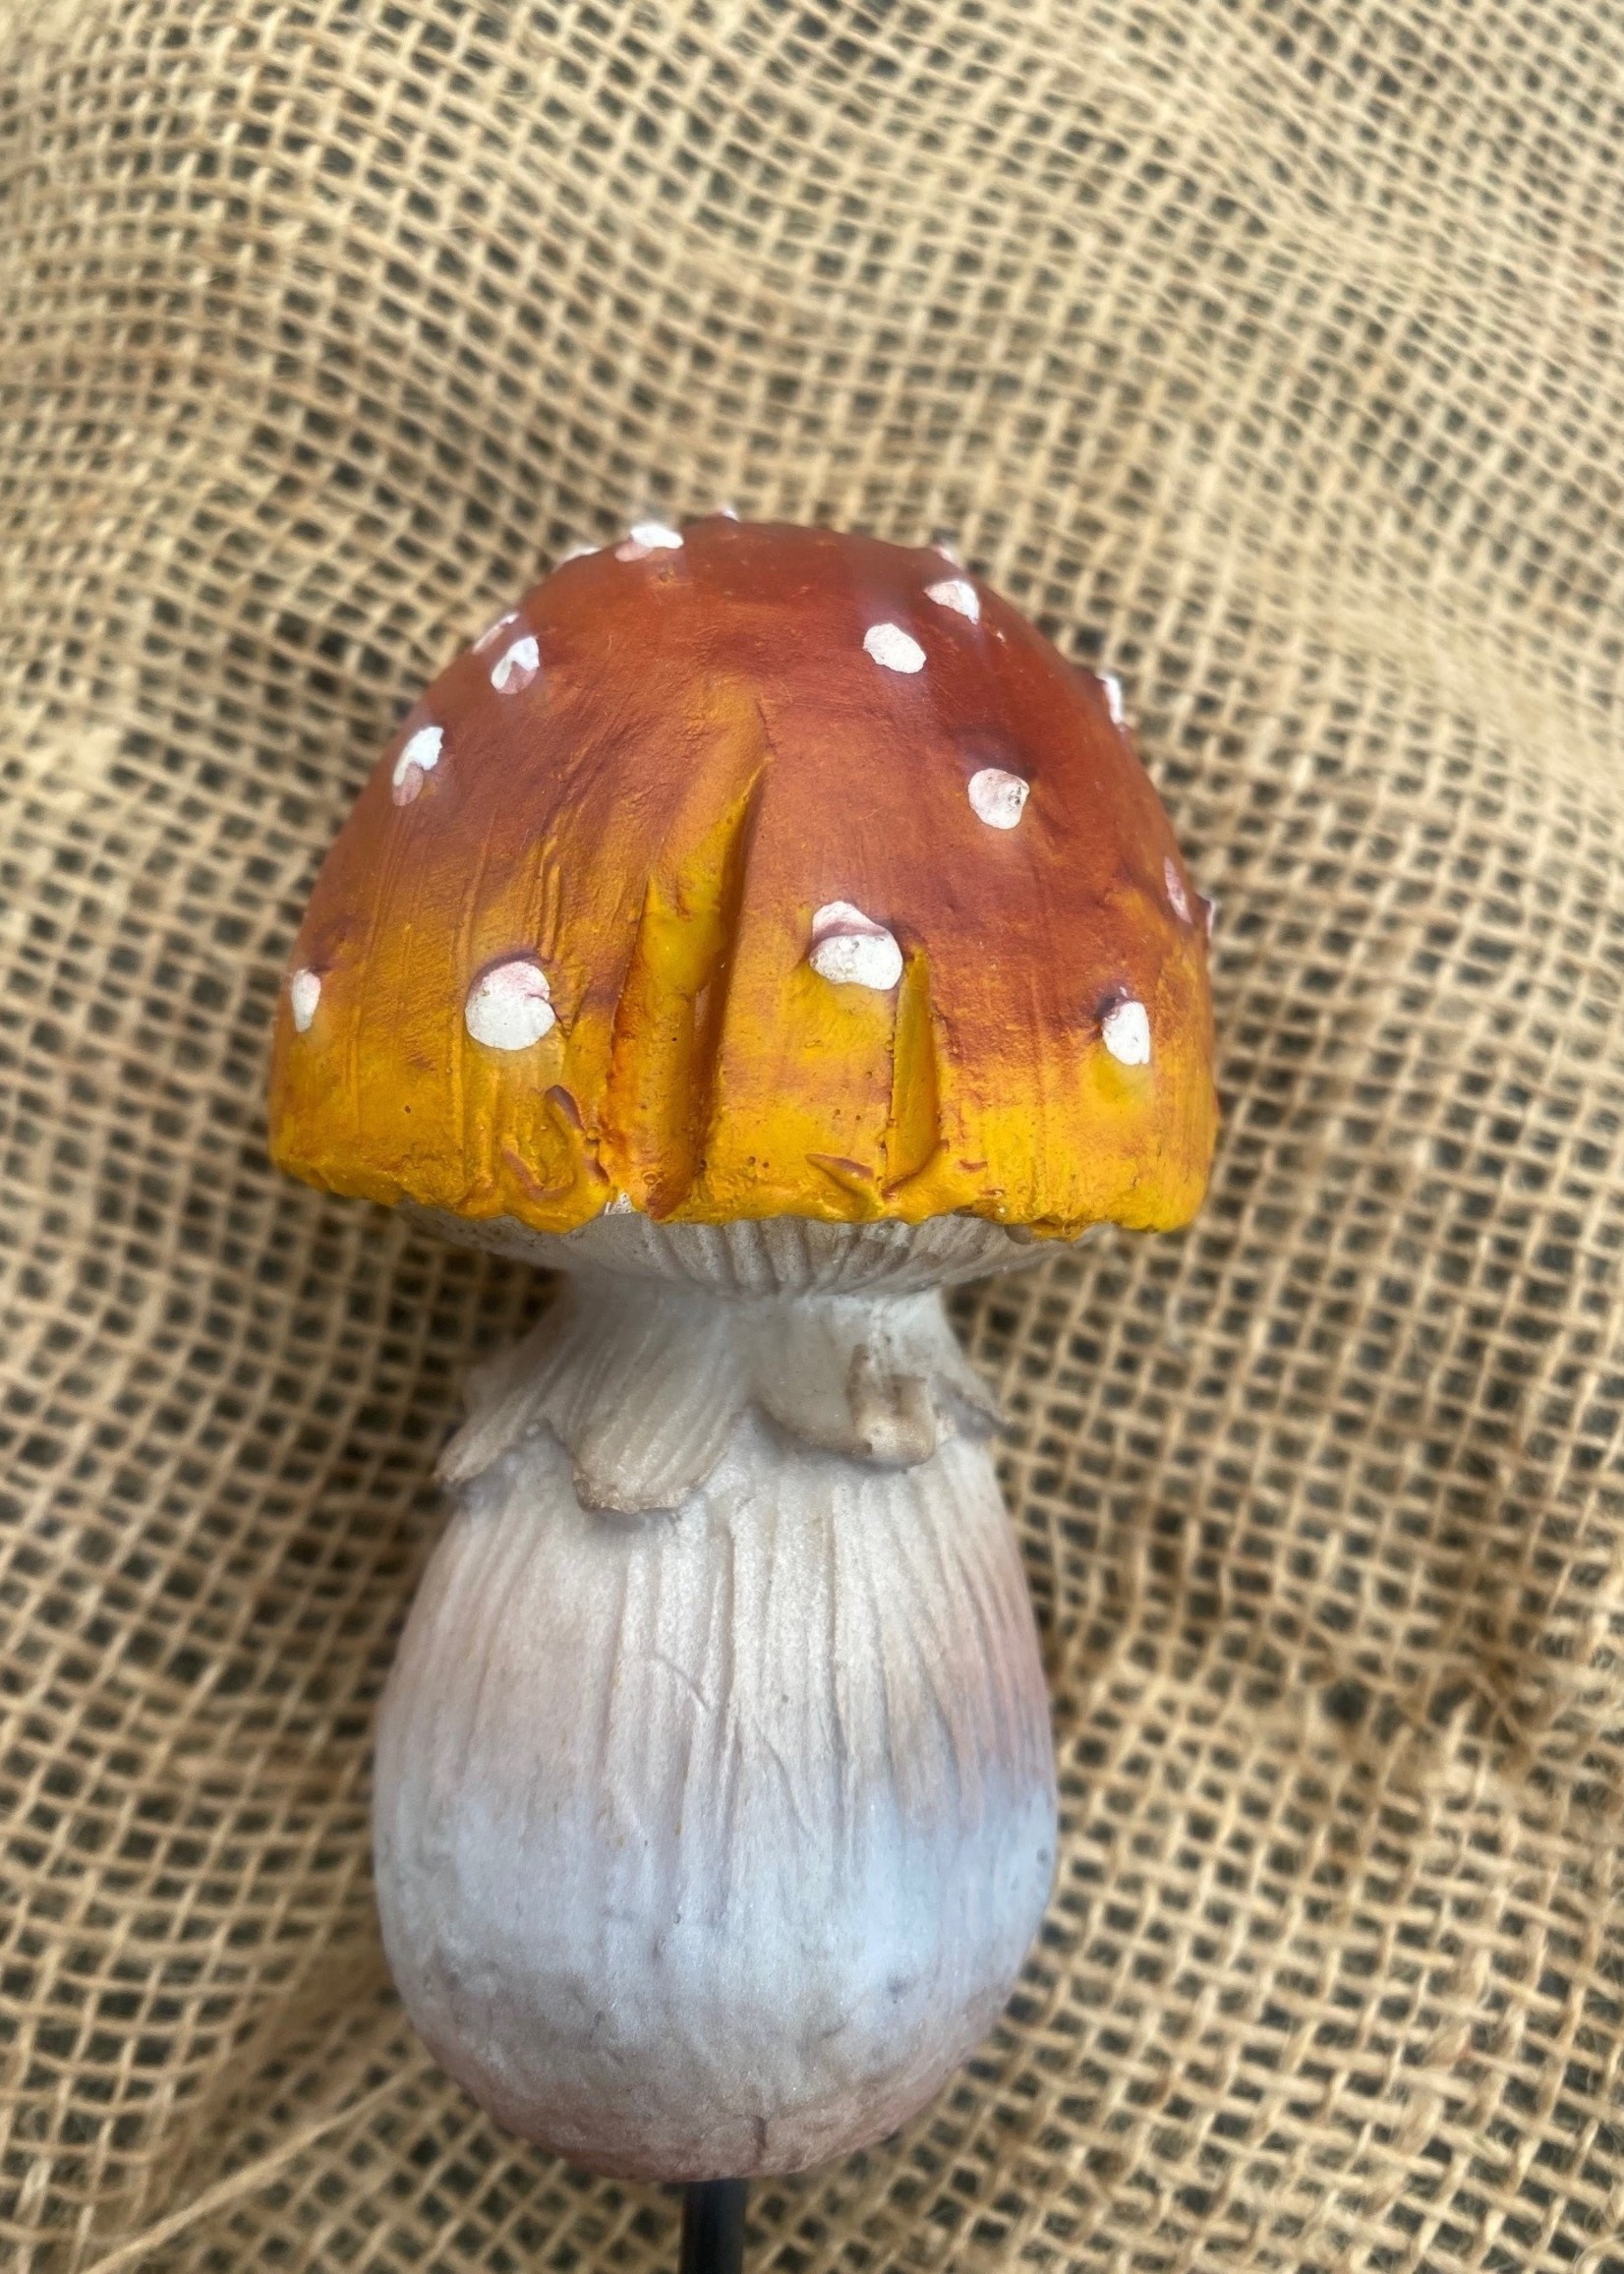 Mushroom Round Top Orange with White Spots